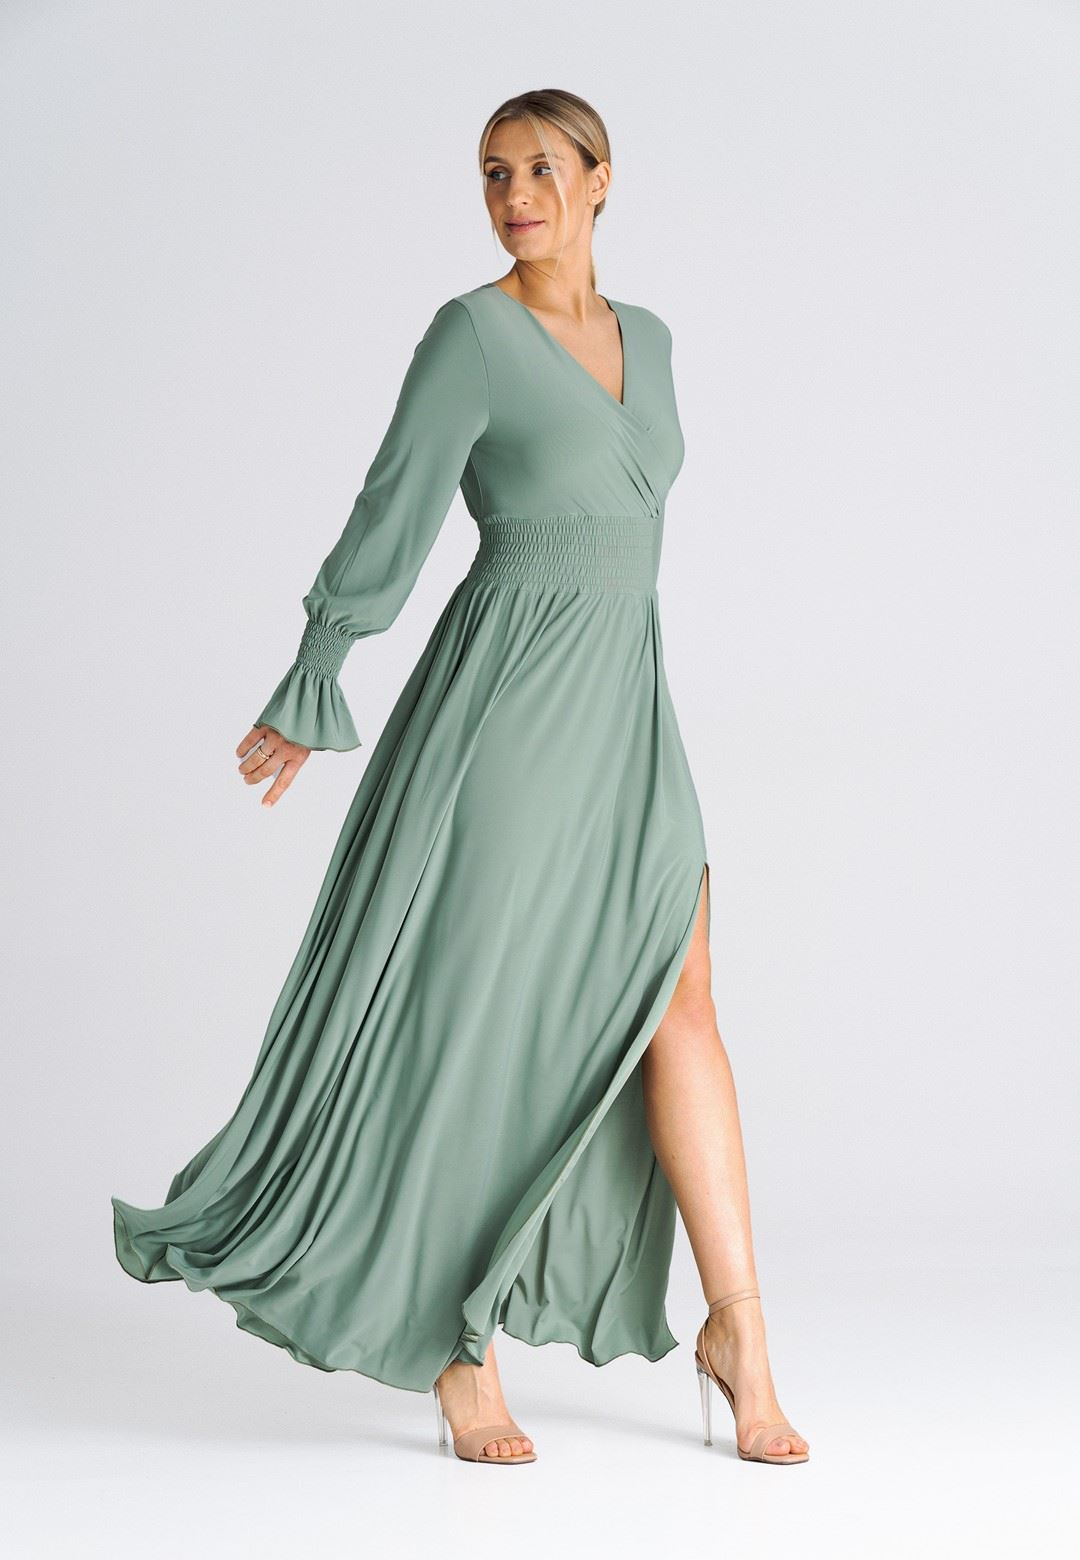 Dress M940 Olive Green S/M